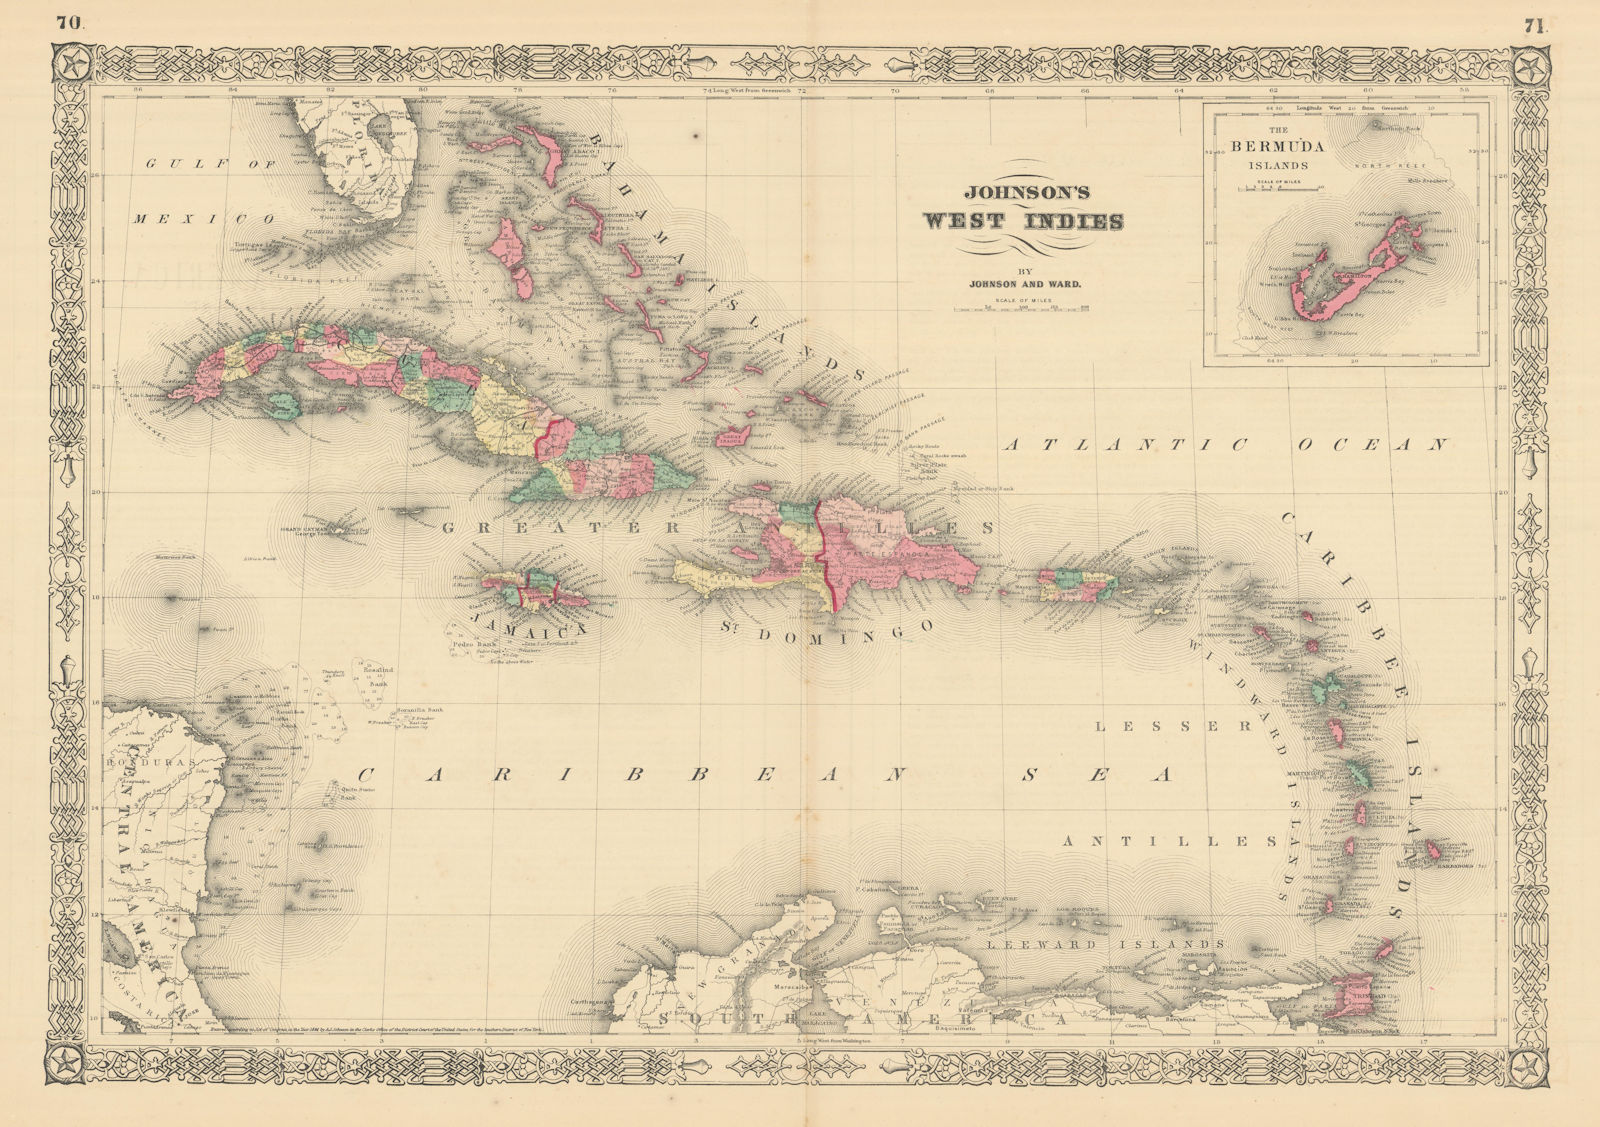 Associate Product Johnson's West Indies. Bermuda Islands. Caribbean Bahamas Antilles 1866 map